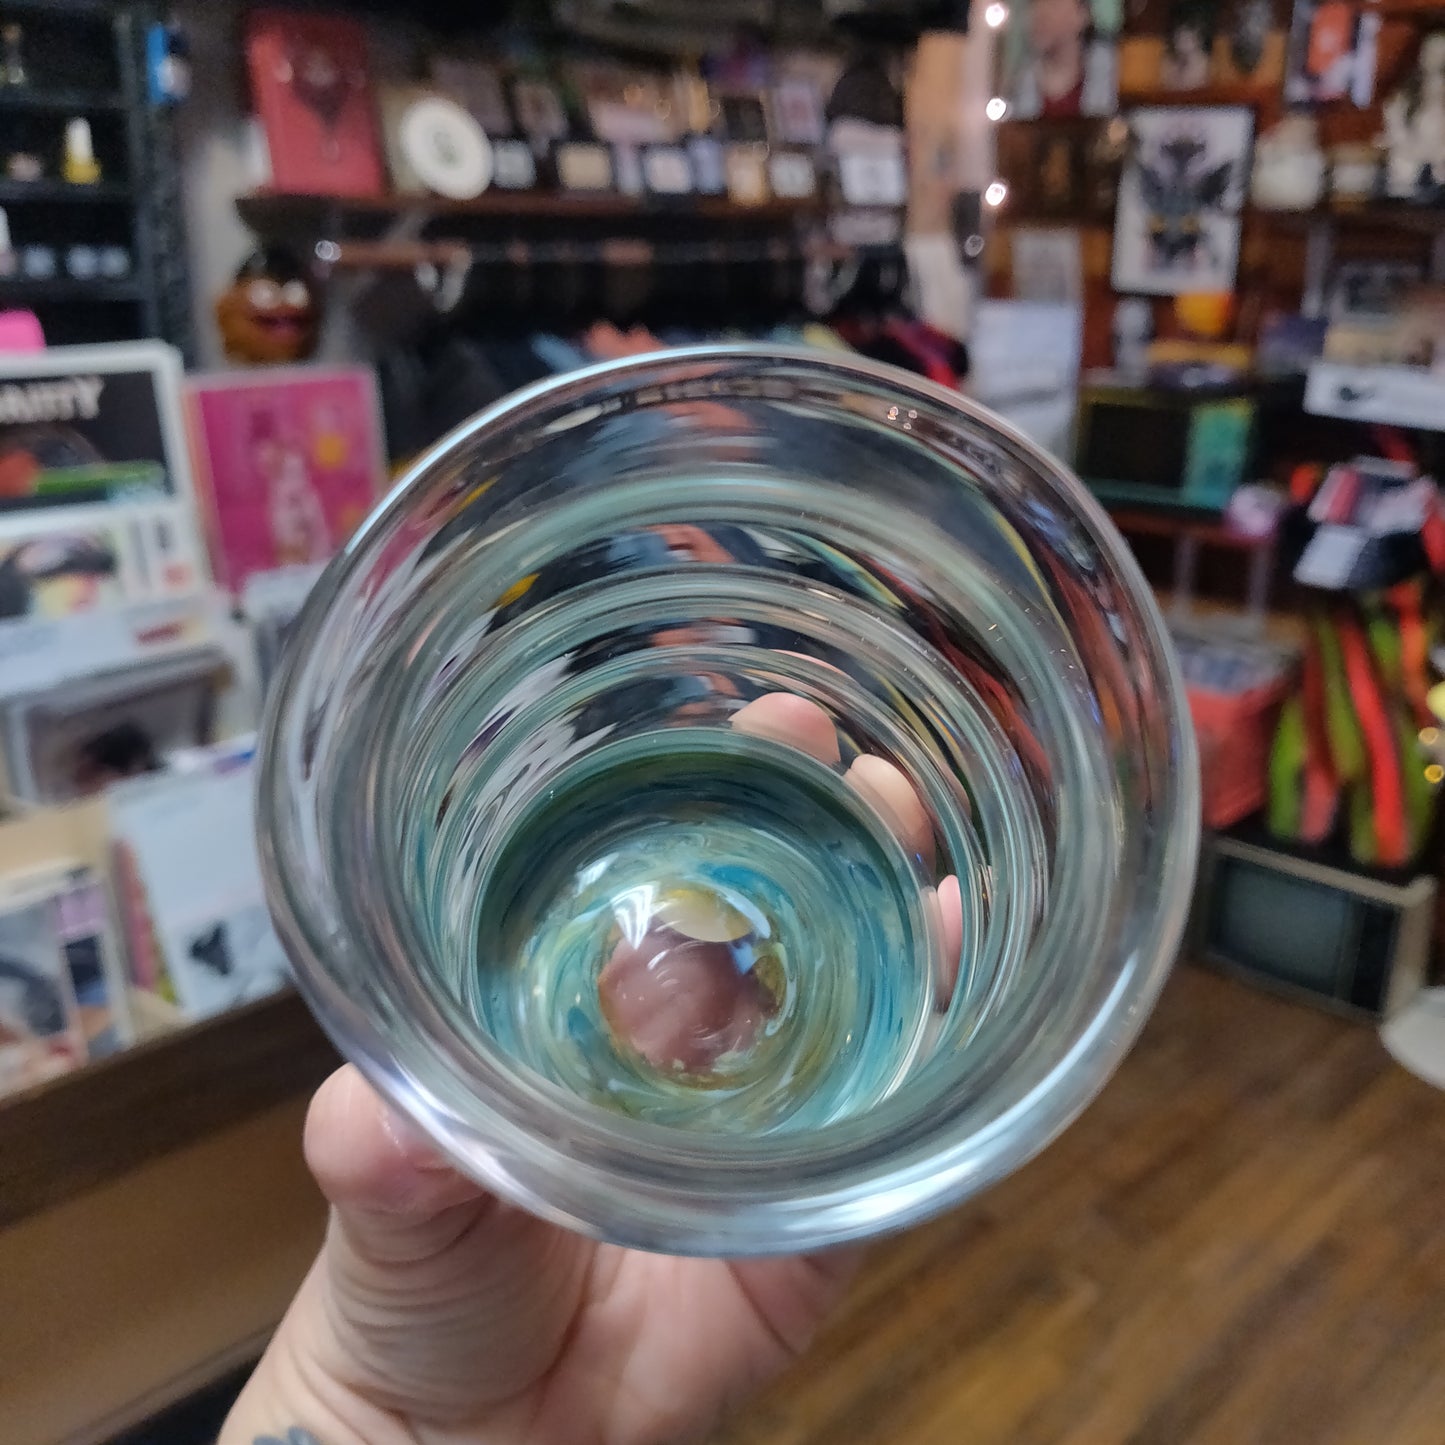 Medium Spiral Hand Blown Glass CUP by W.C. Glass